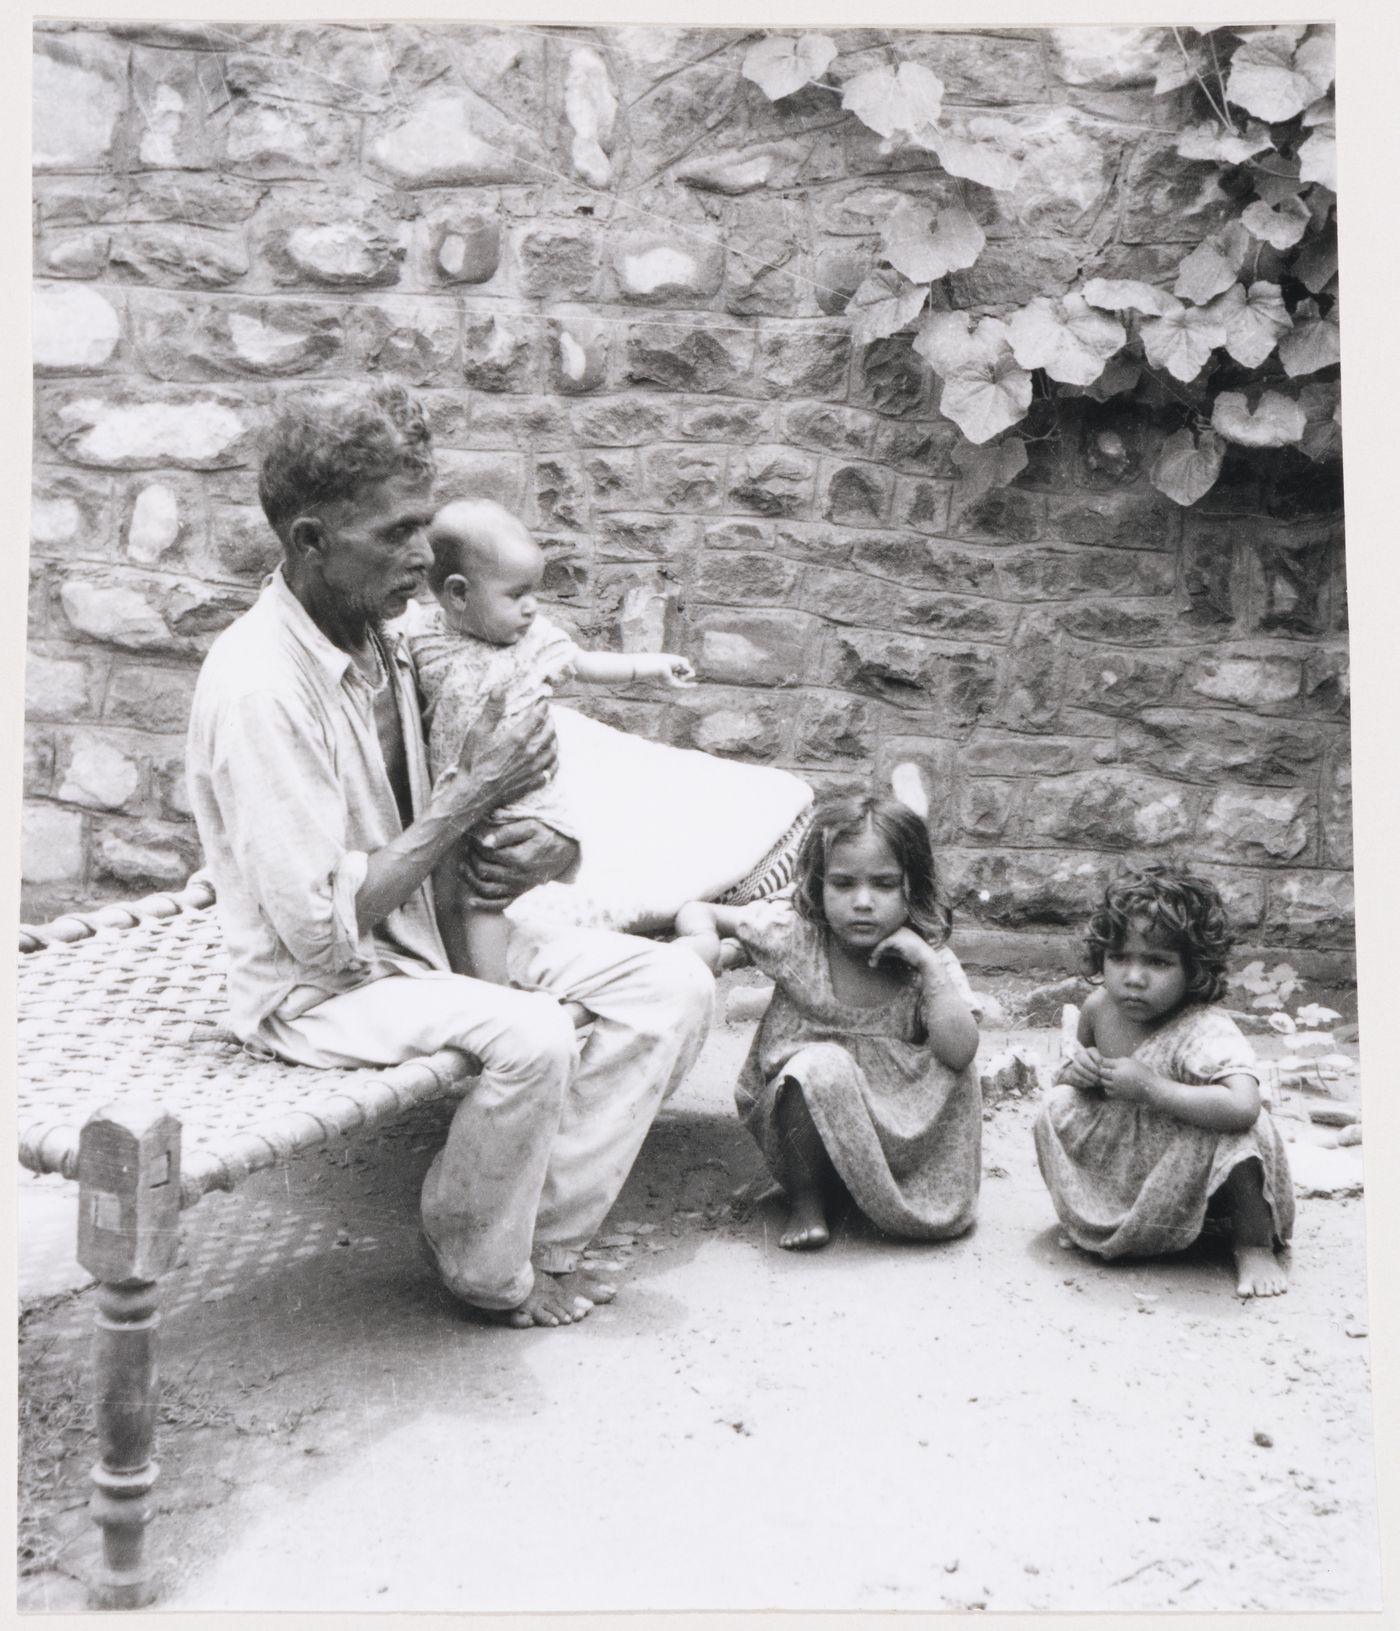 Man with children, Chandigarh, India